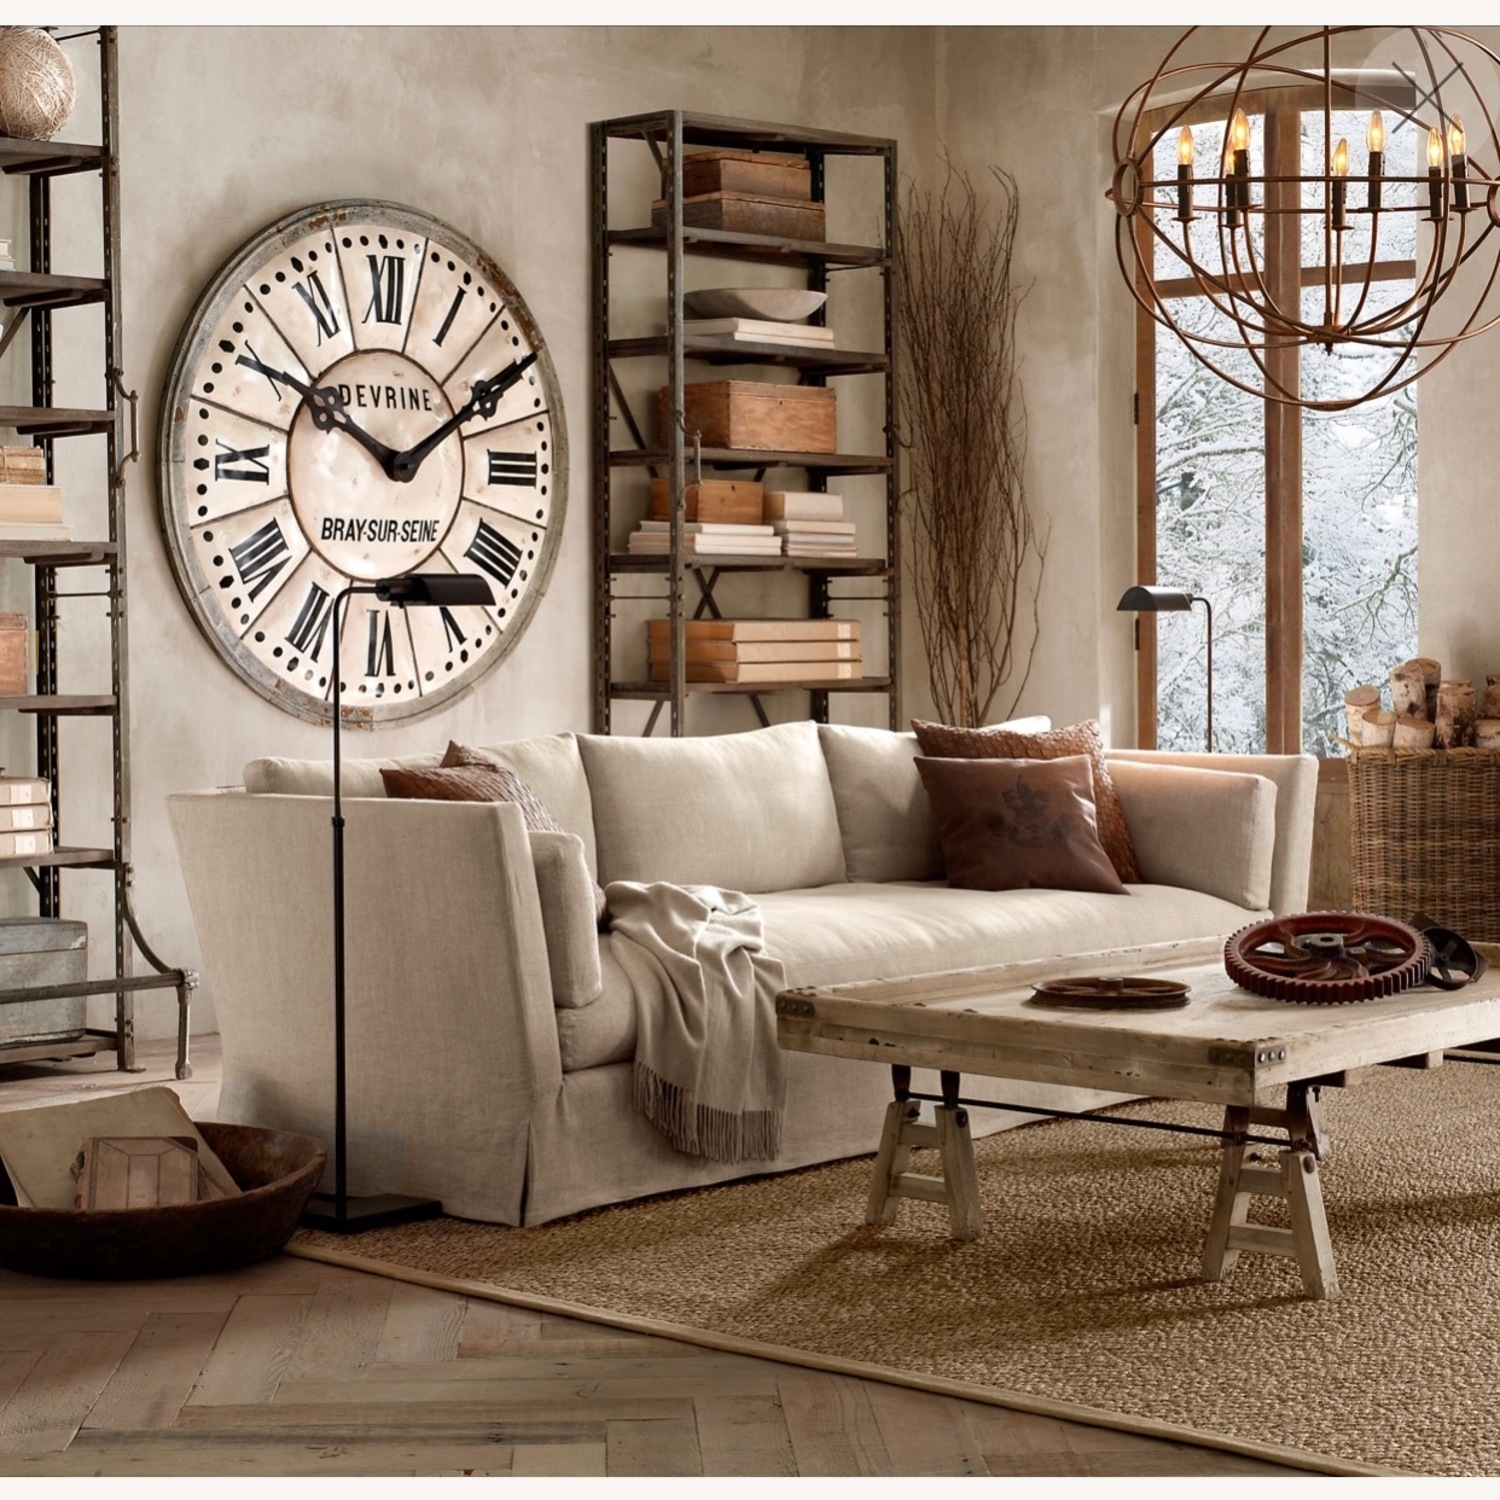 Oversized Decorative Wall Clocks Ideas on Foter